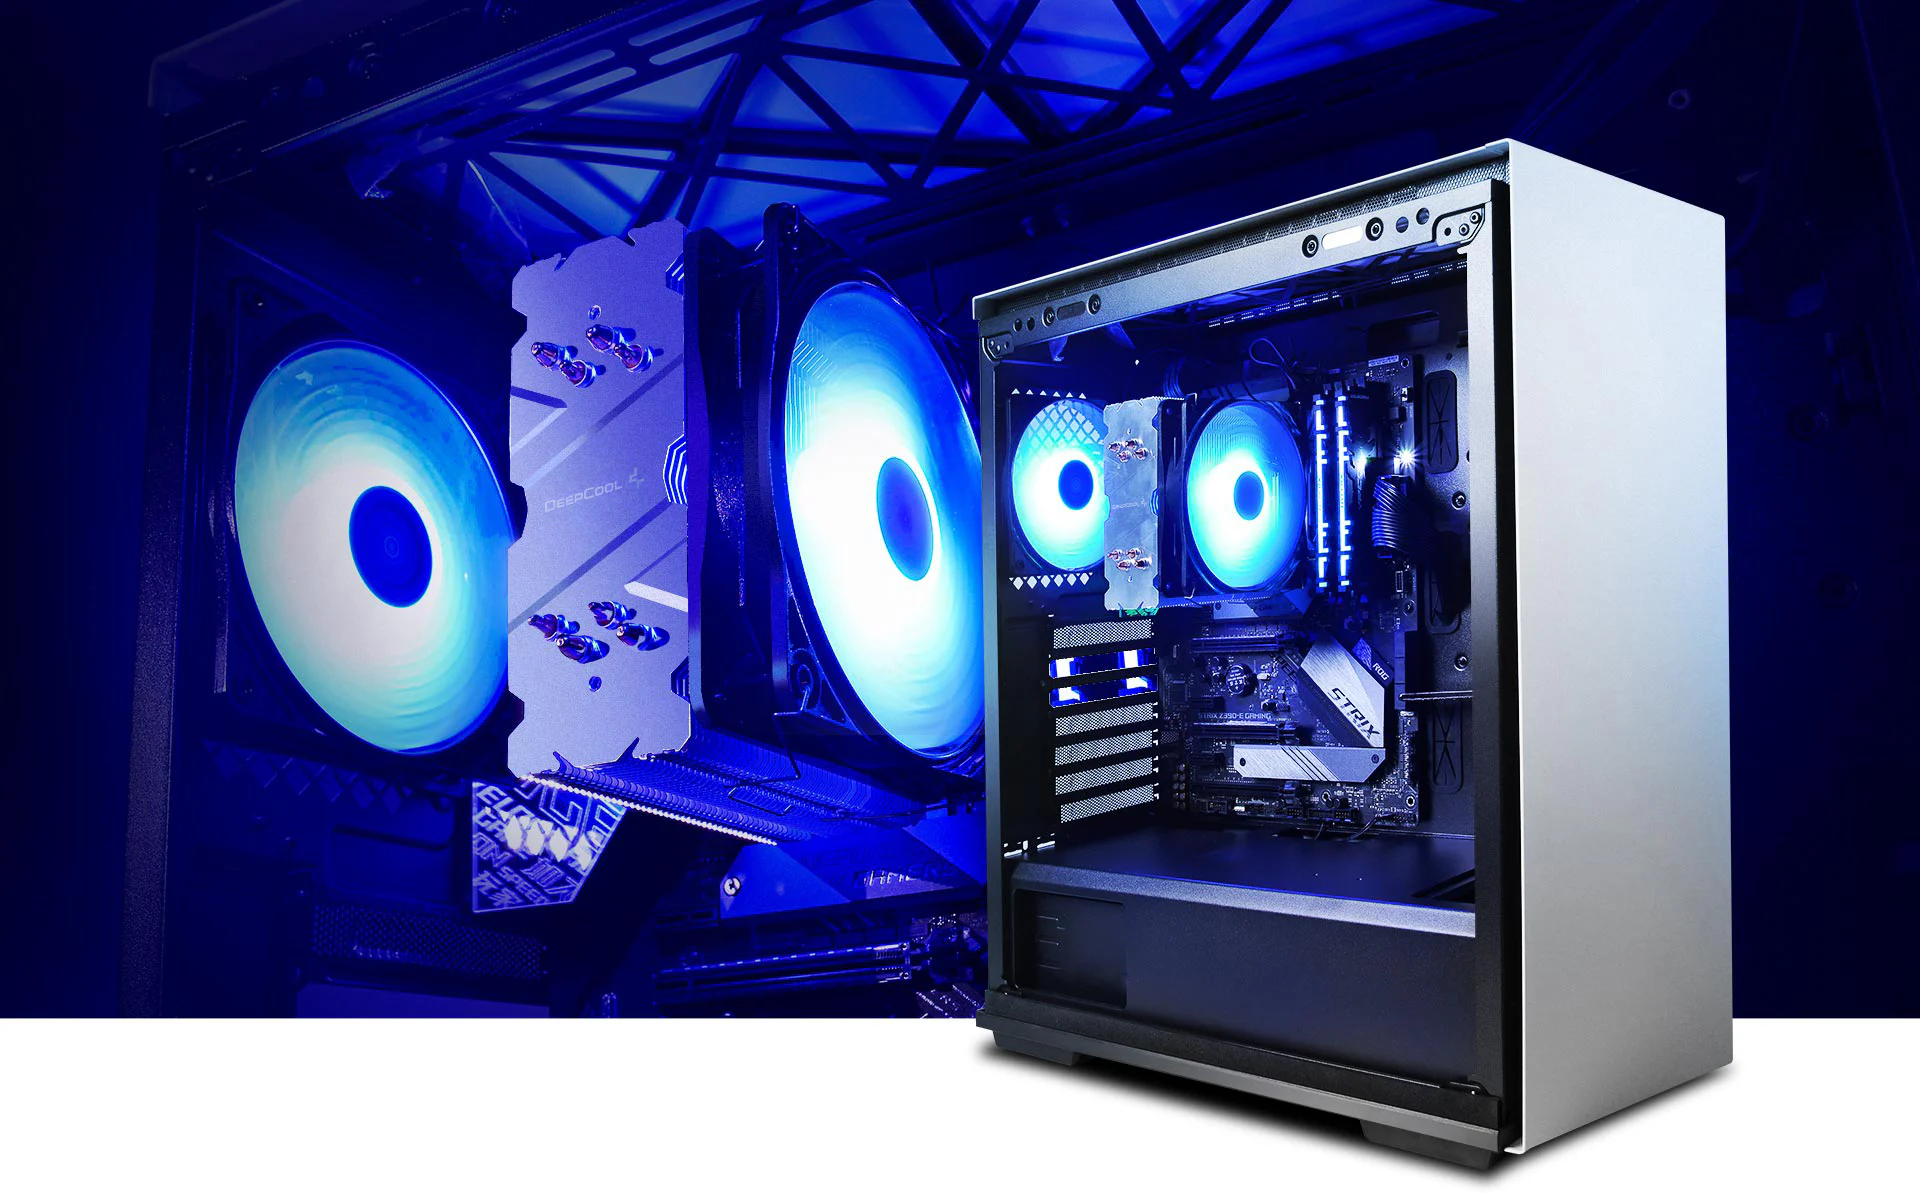 GAMMAXX 400 V2(Blue) - DeepCool